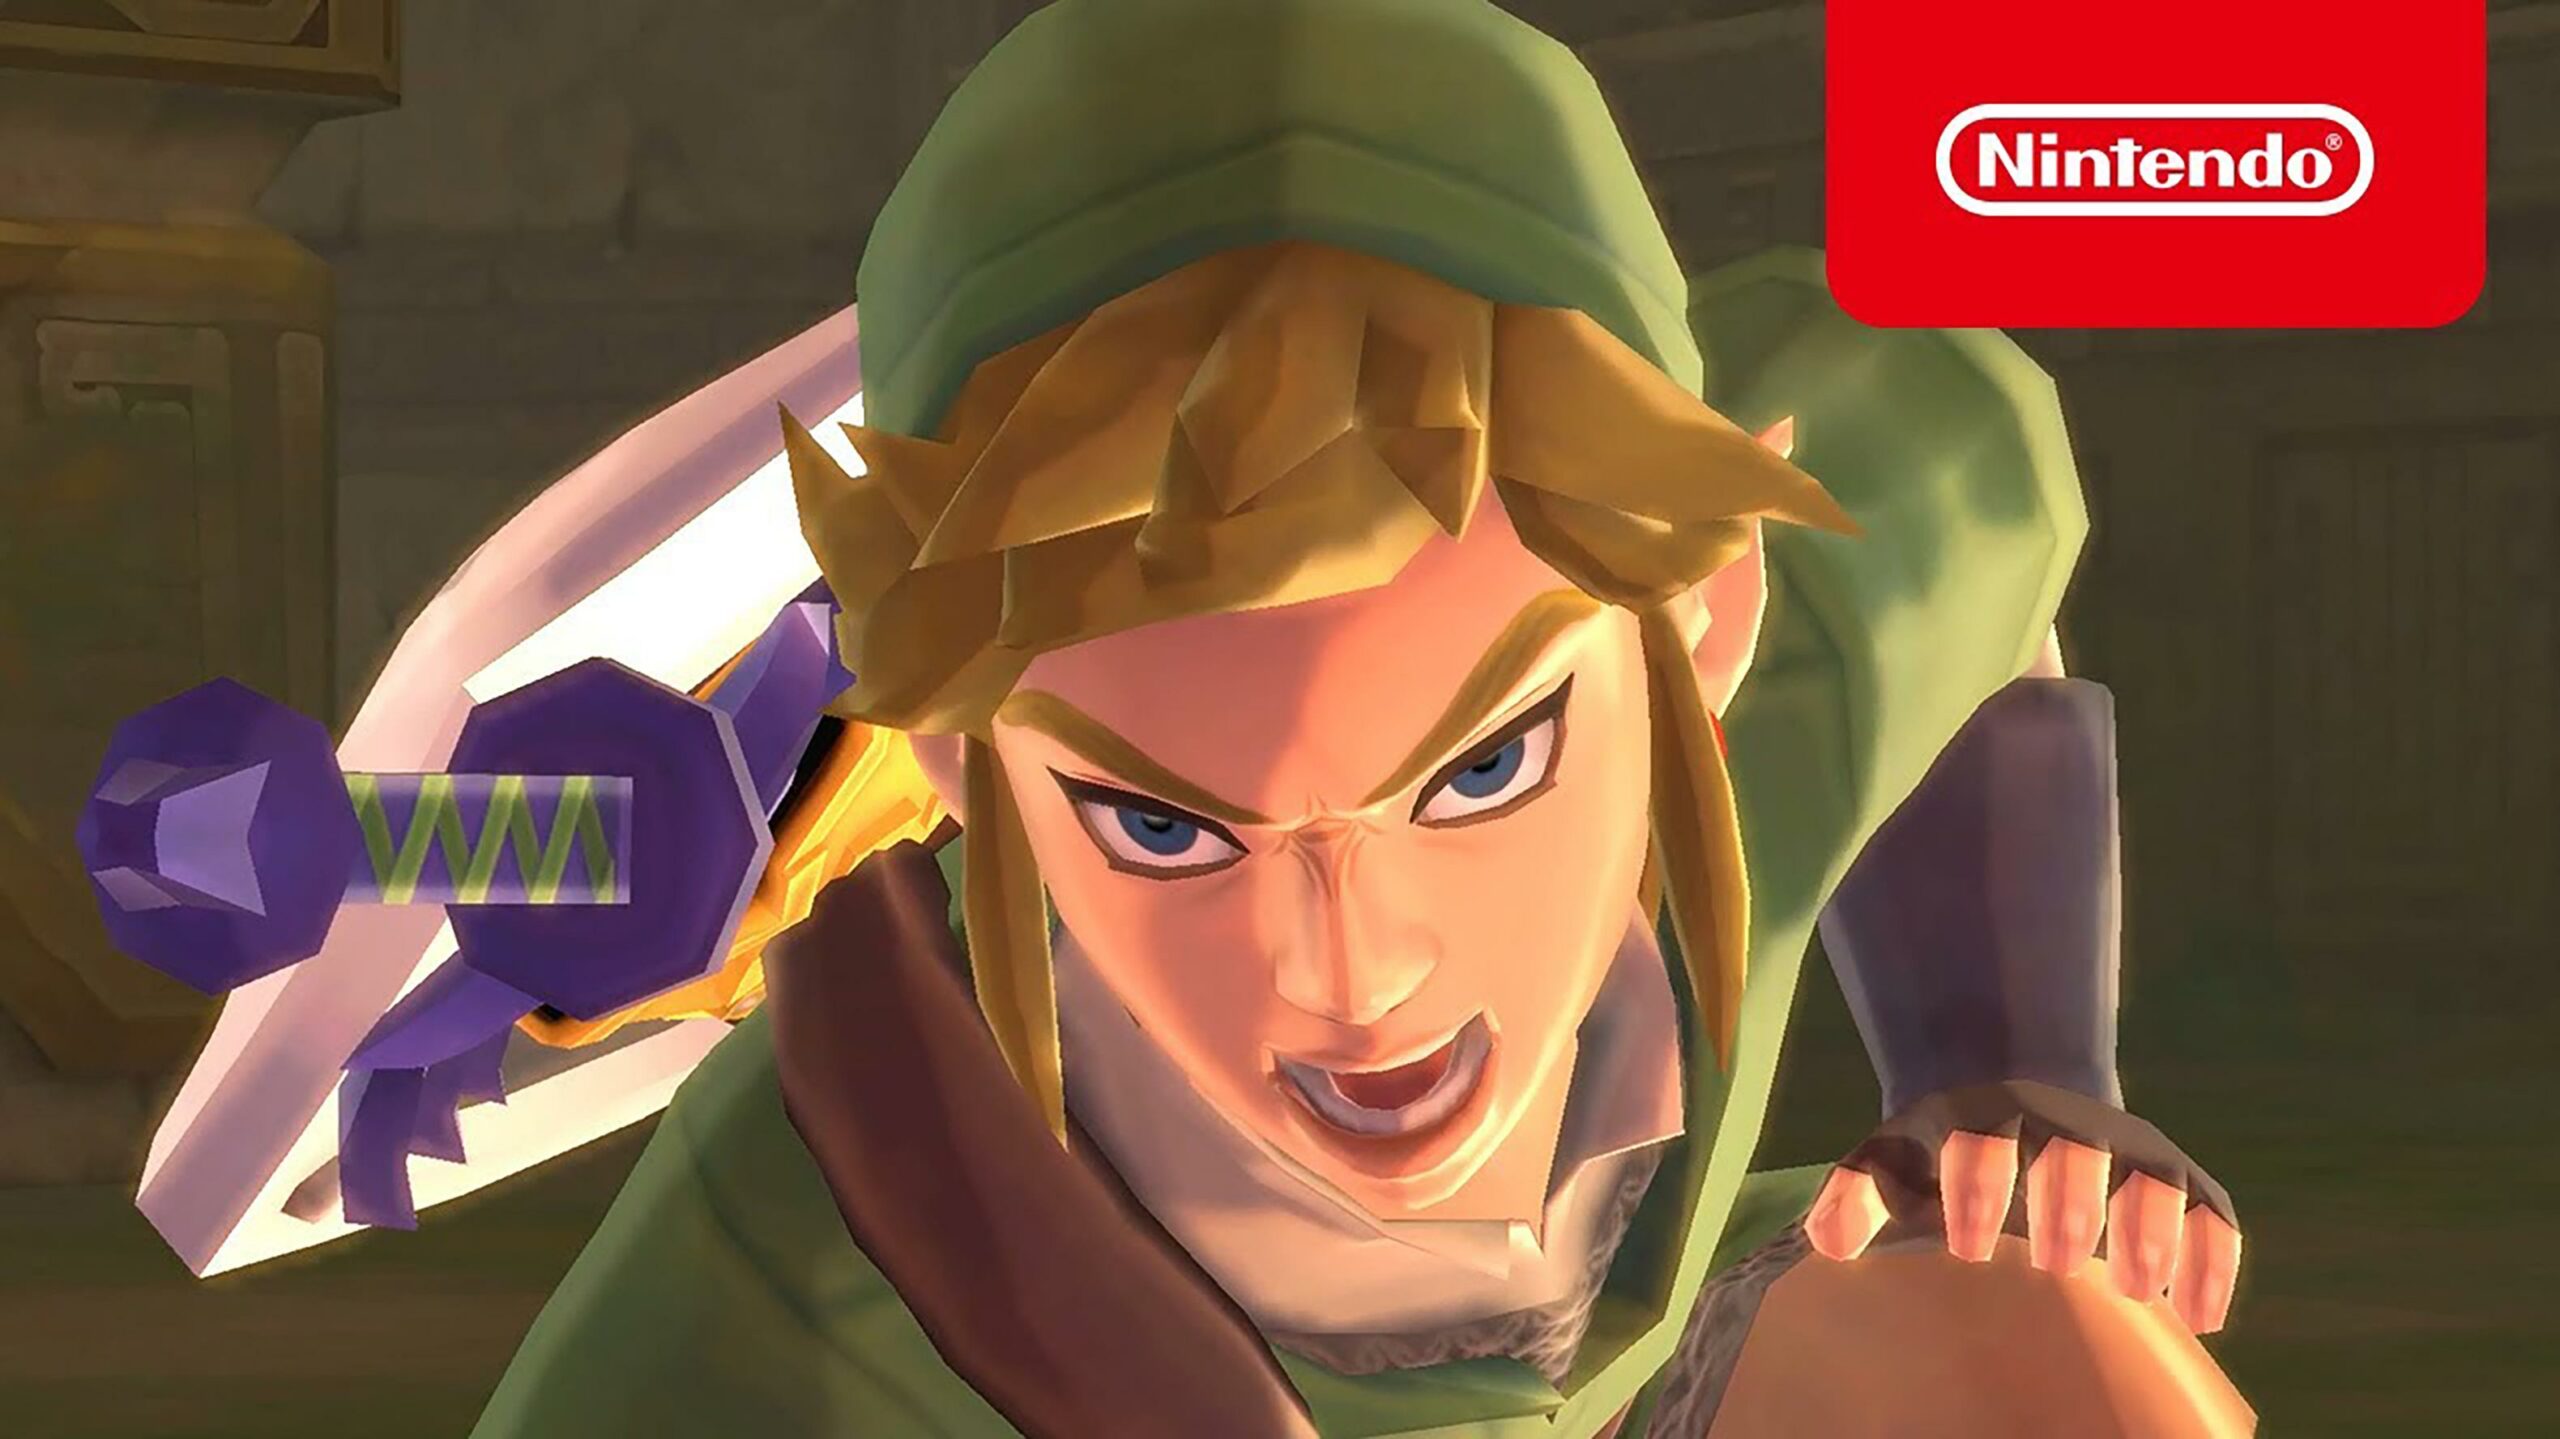 Angry Link The Legend of Zelda